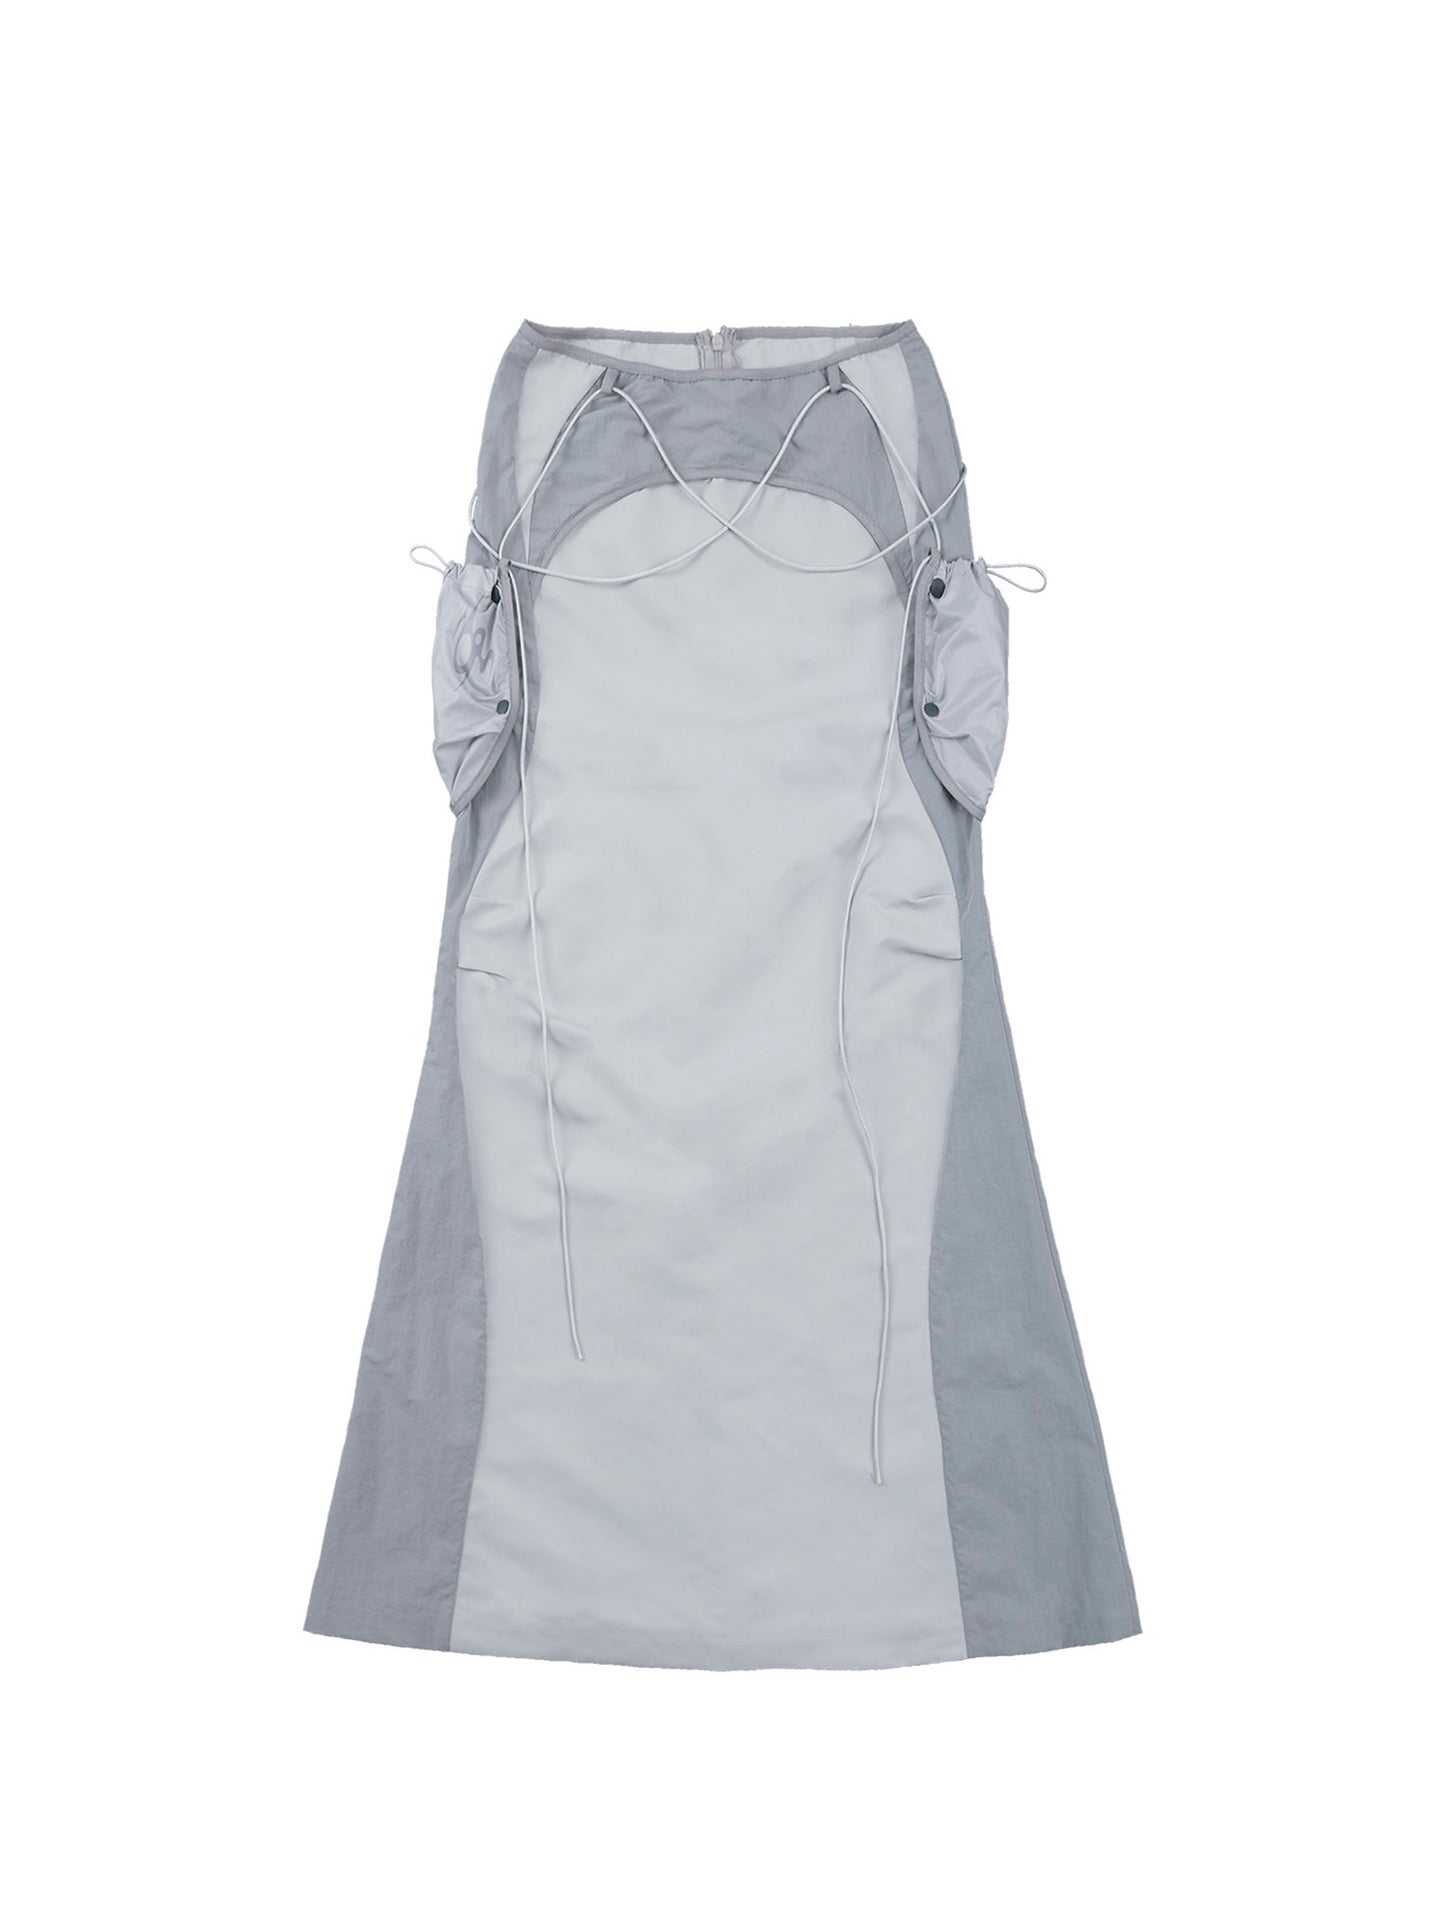 Pocket bag long skirt grey